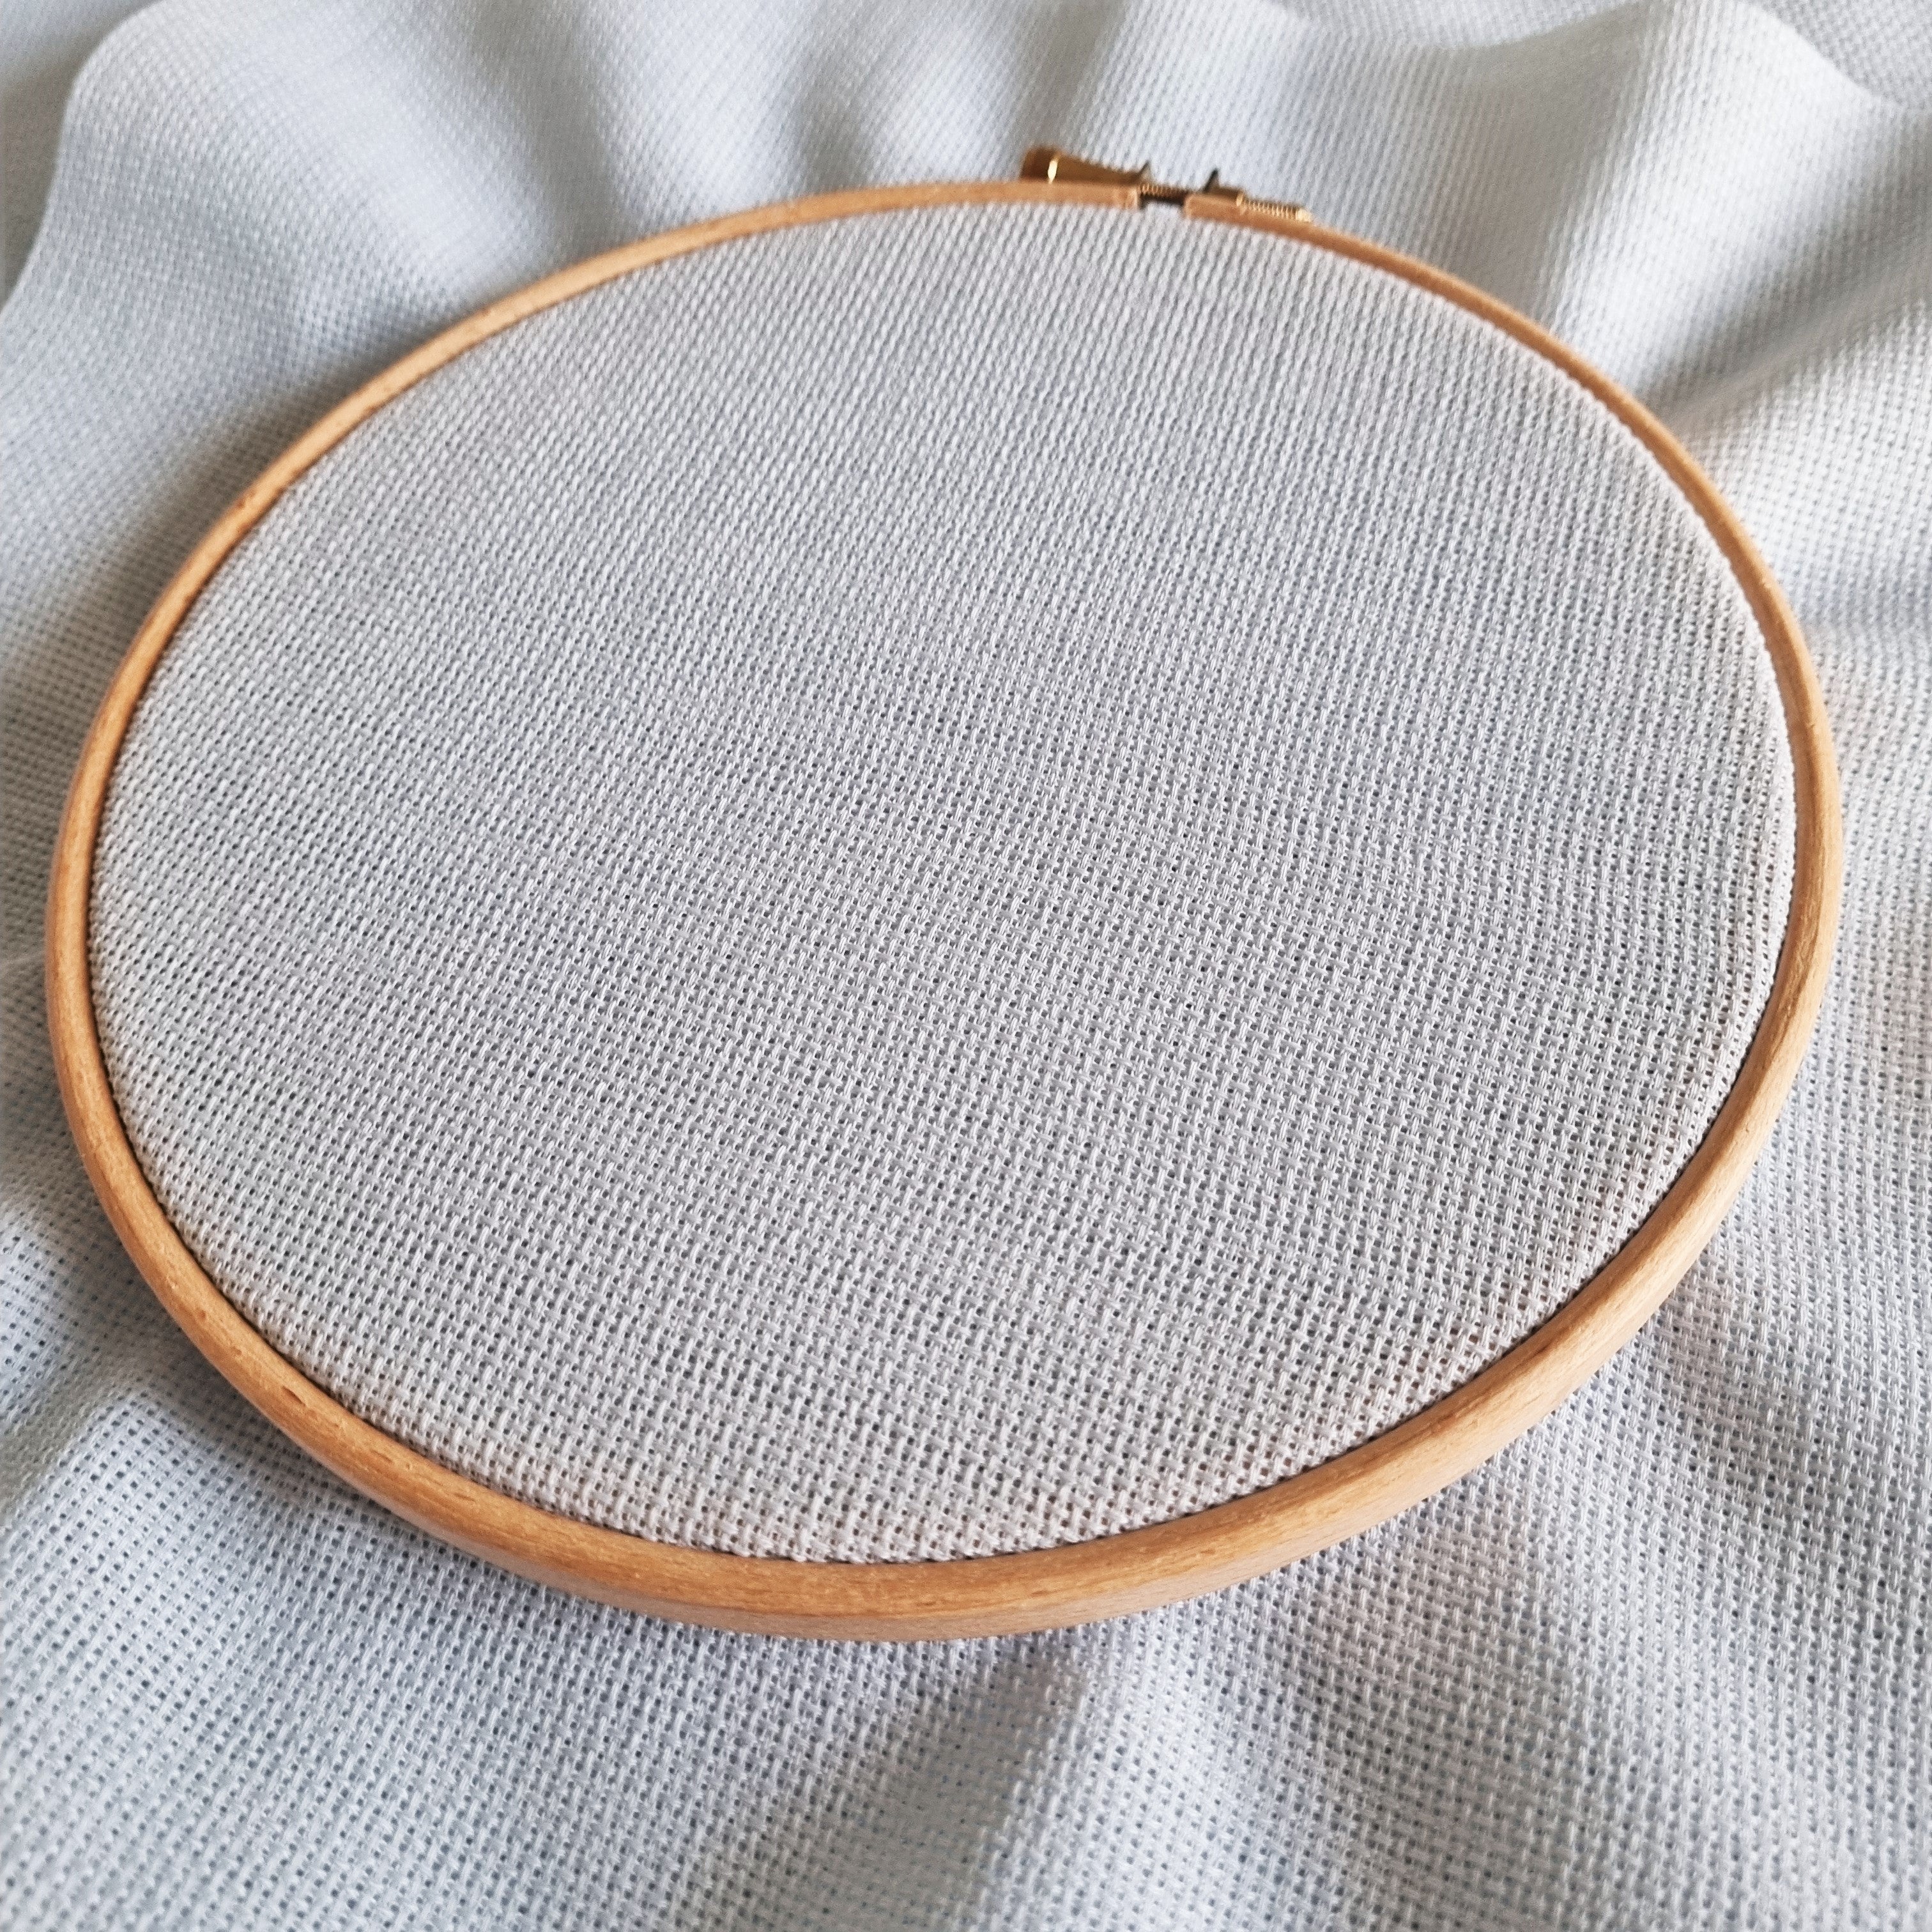 Aida fabric in an embroidery hoop